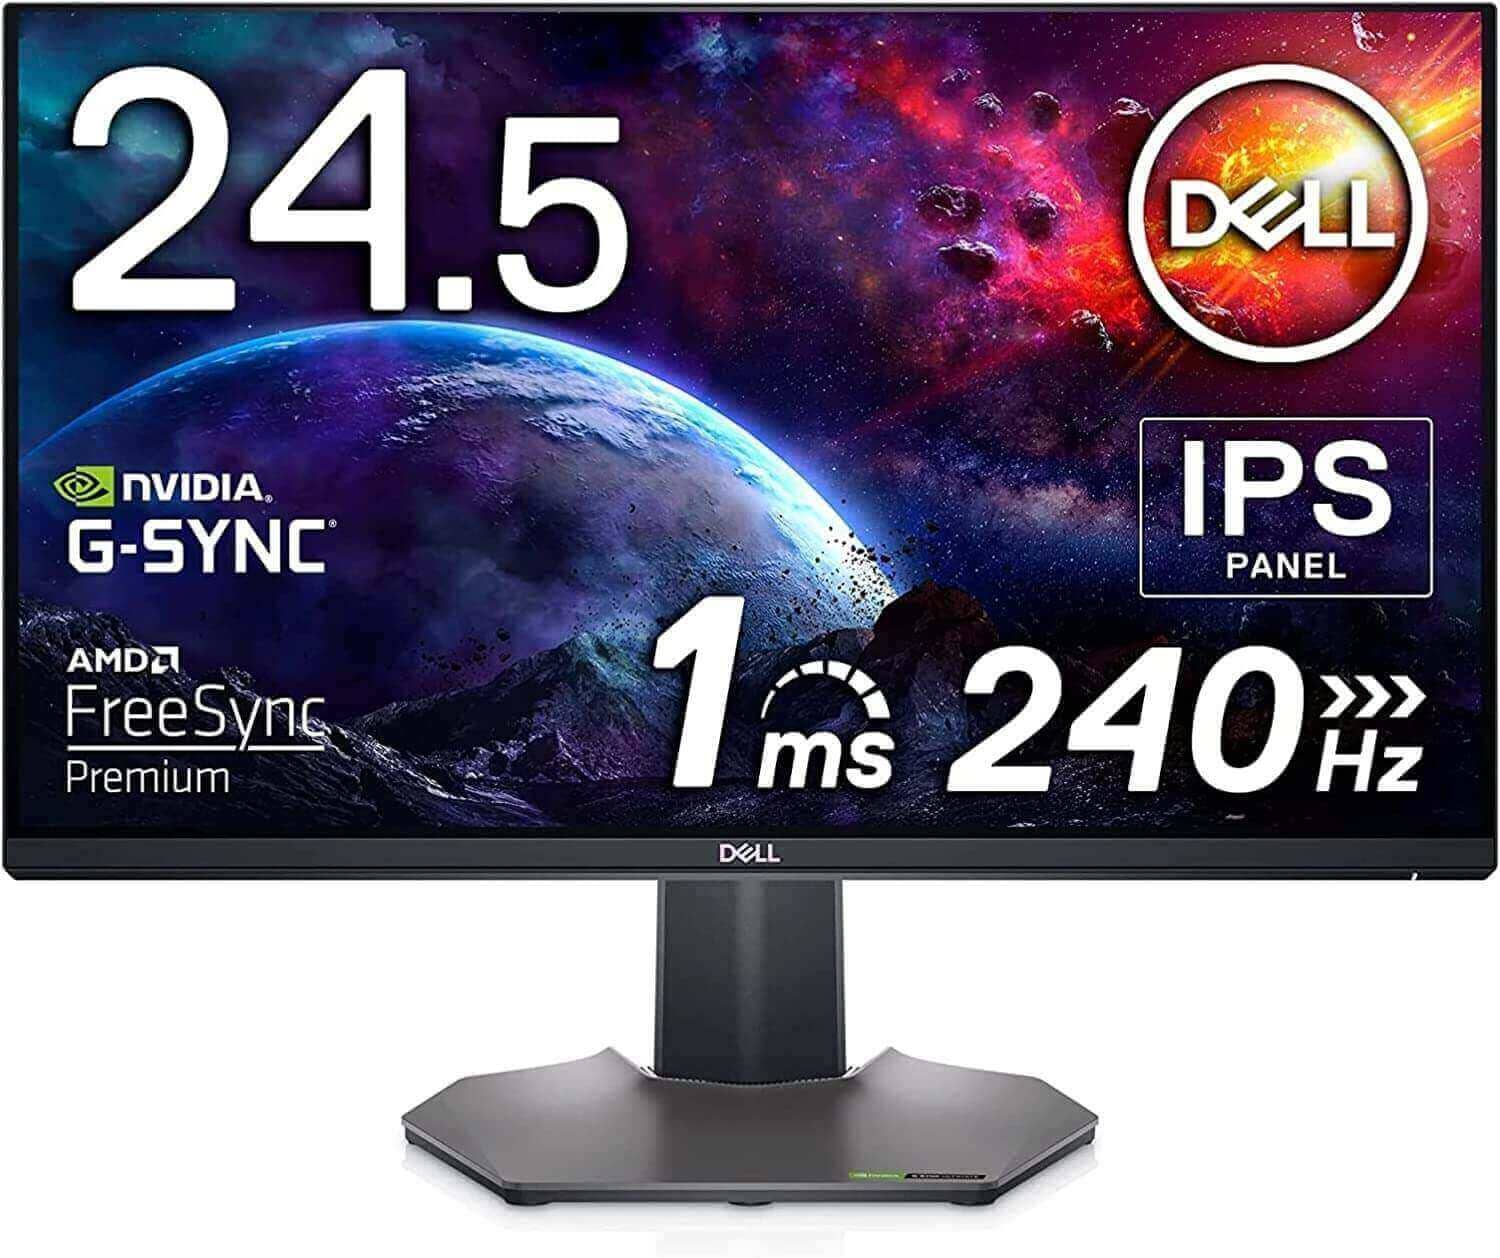 Dell 240Hz Gaming Monitor